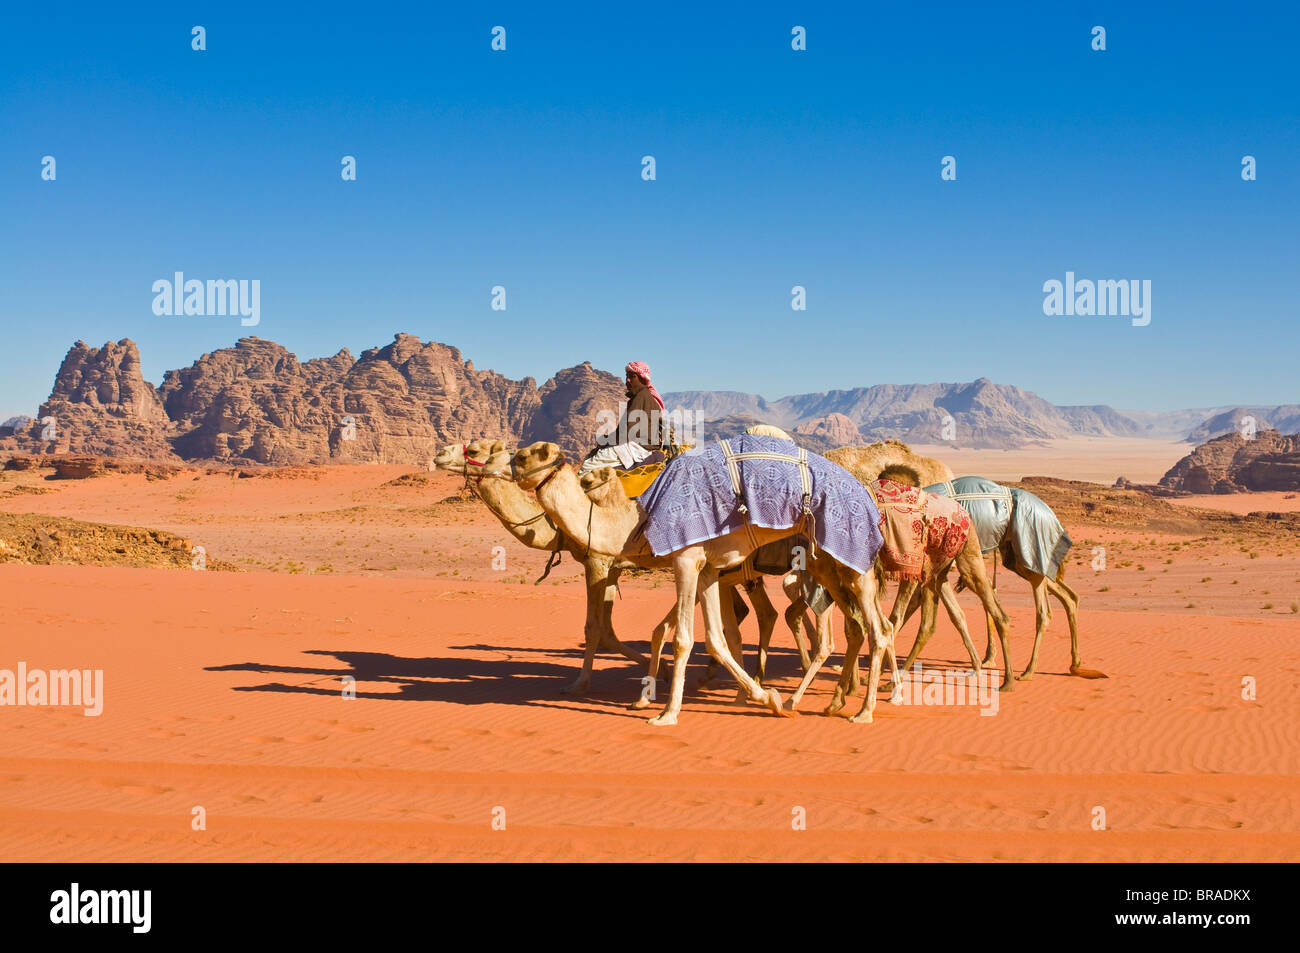 Camel caravan in the stunning desert scenery of Wadi Rum, Jordan, Middle East Stock Photo